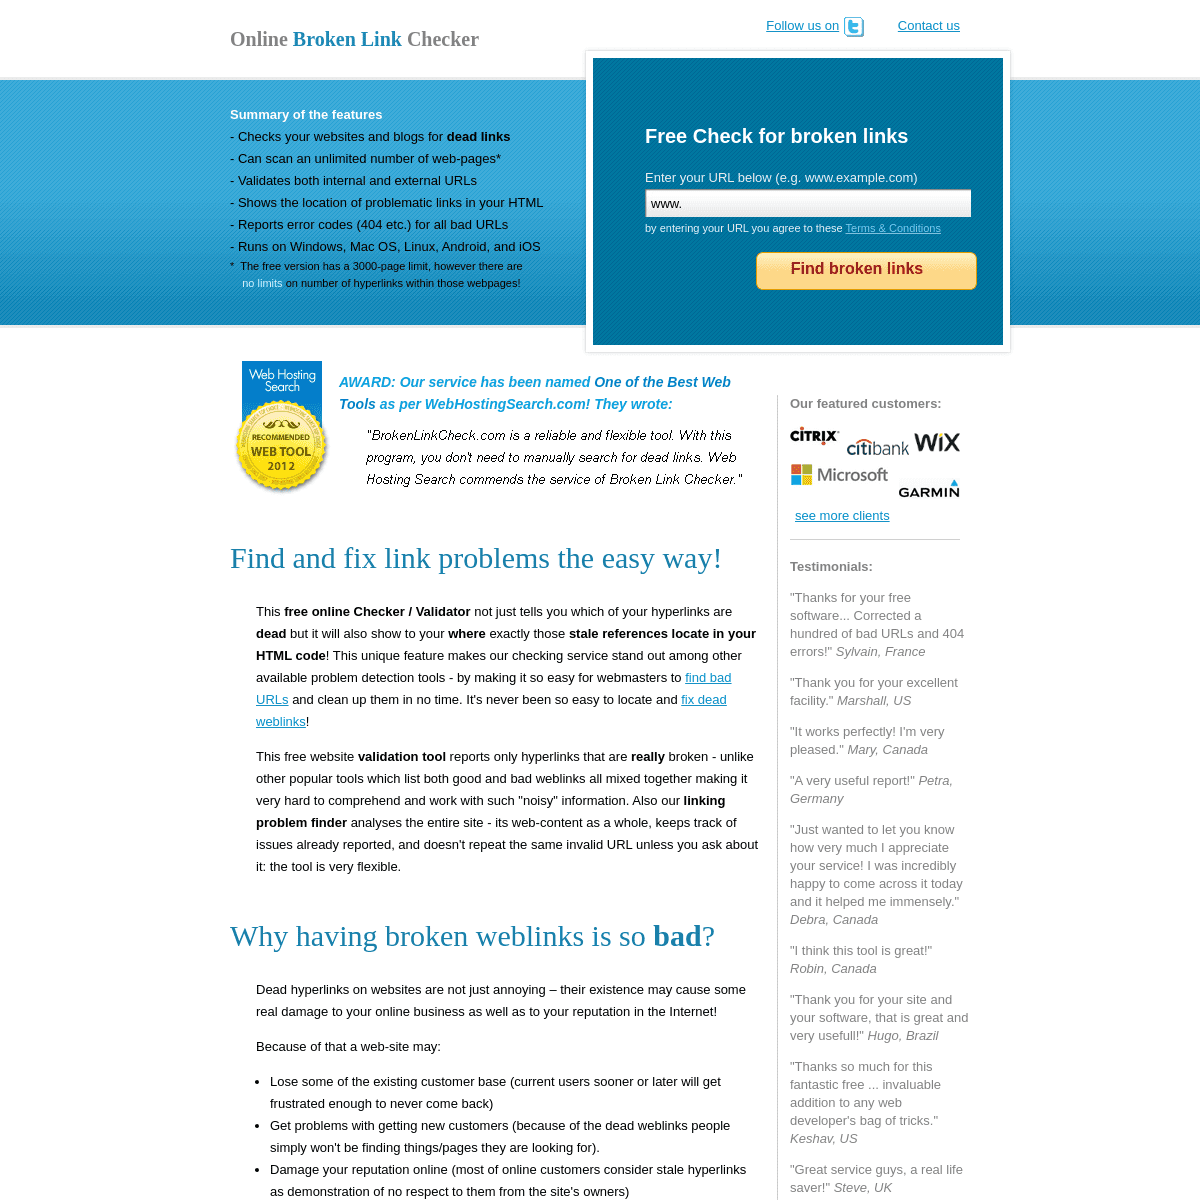 A complete backup of brokenlinkcheck.com